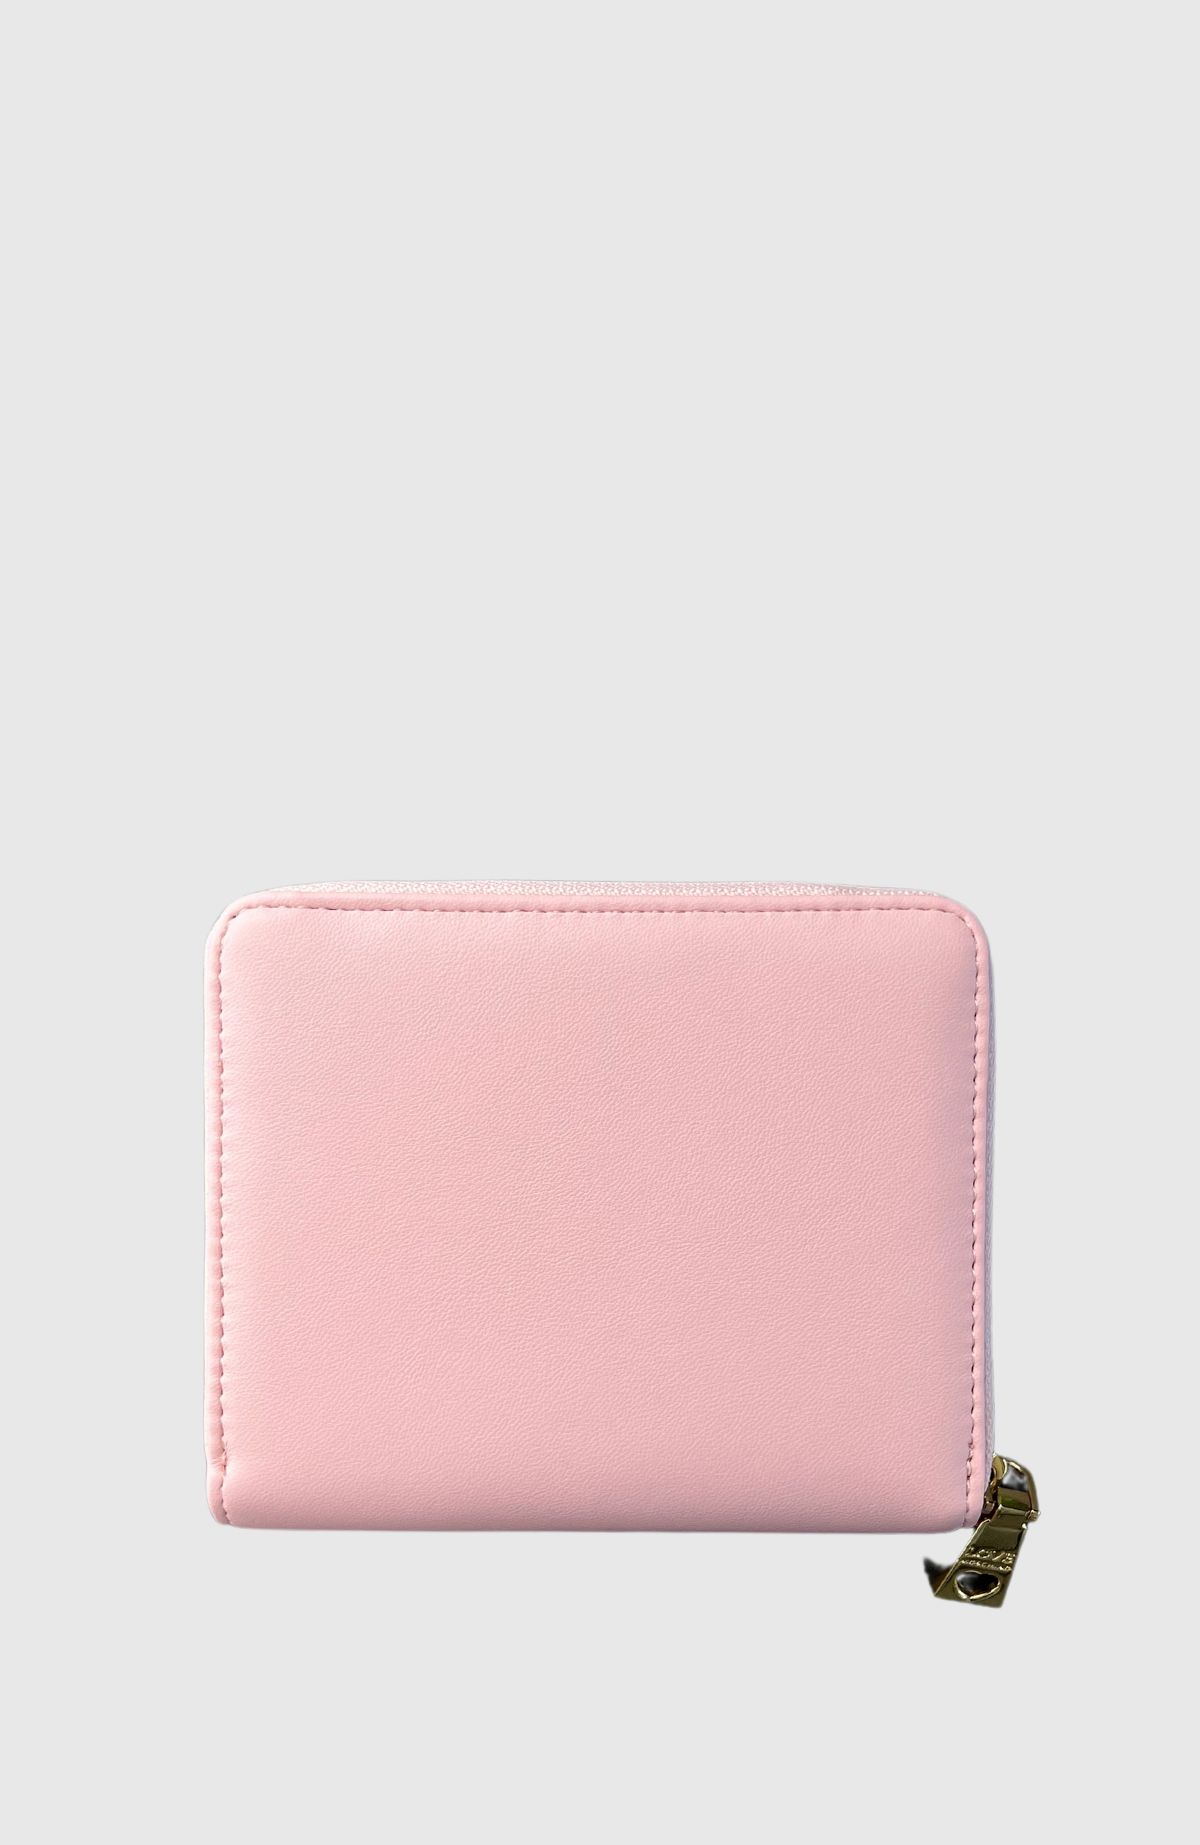 Love Moschino Wallet